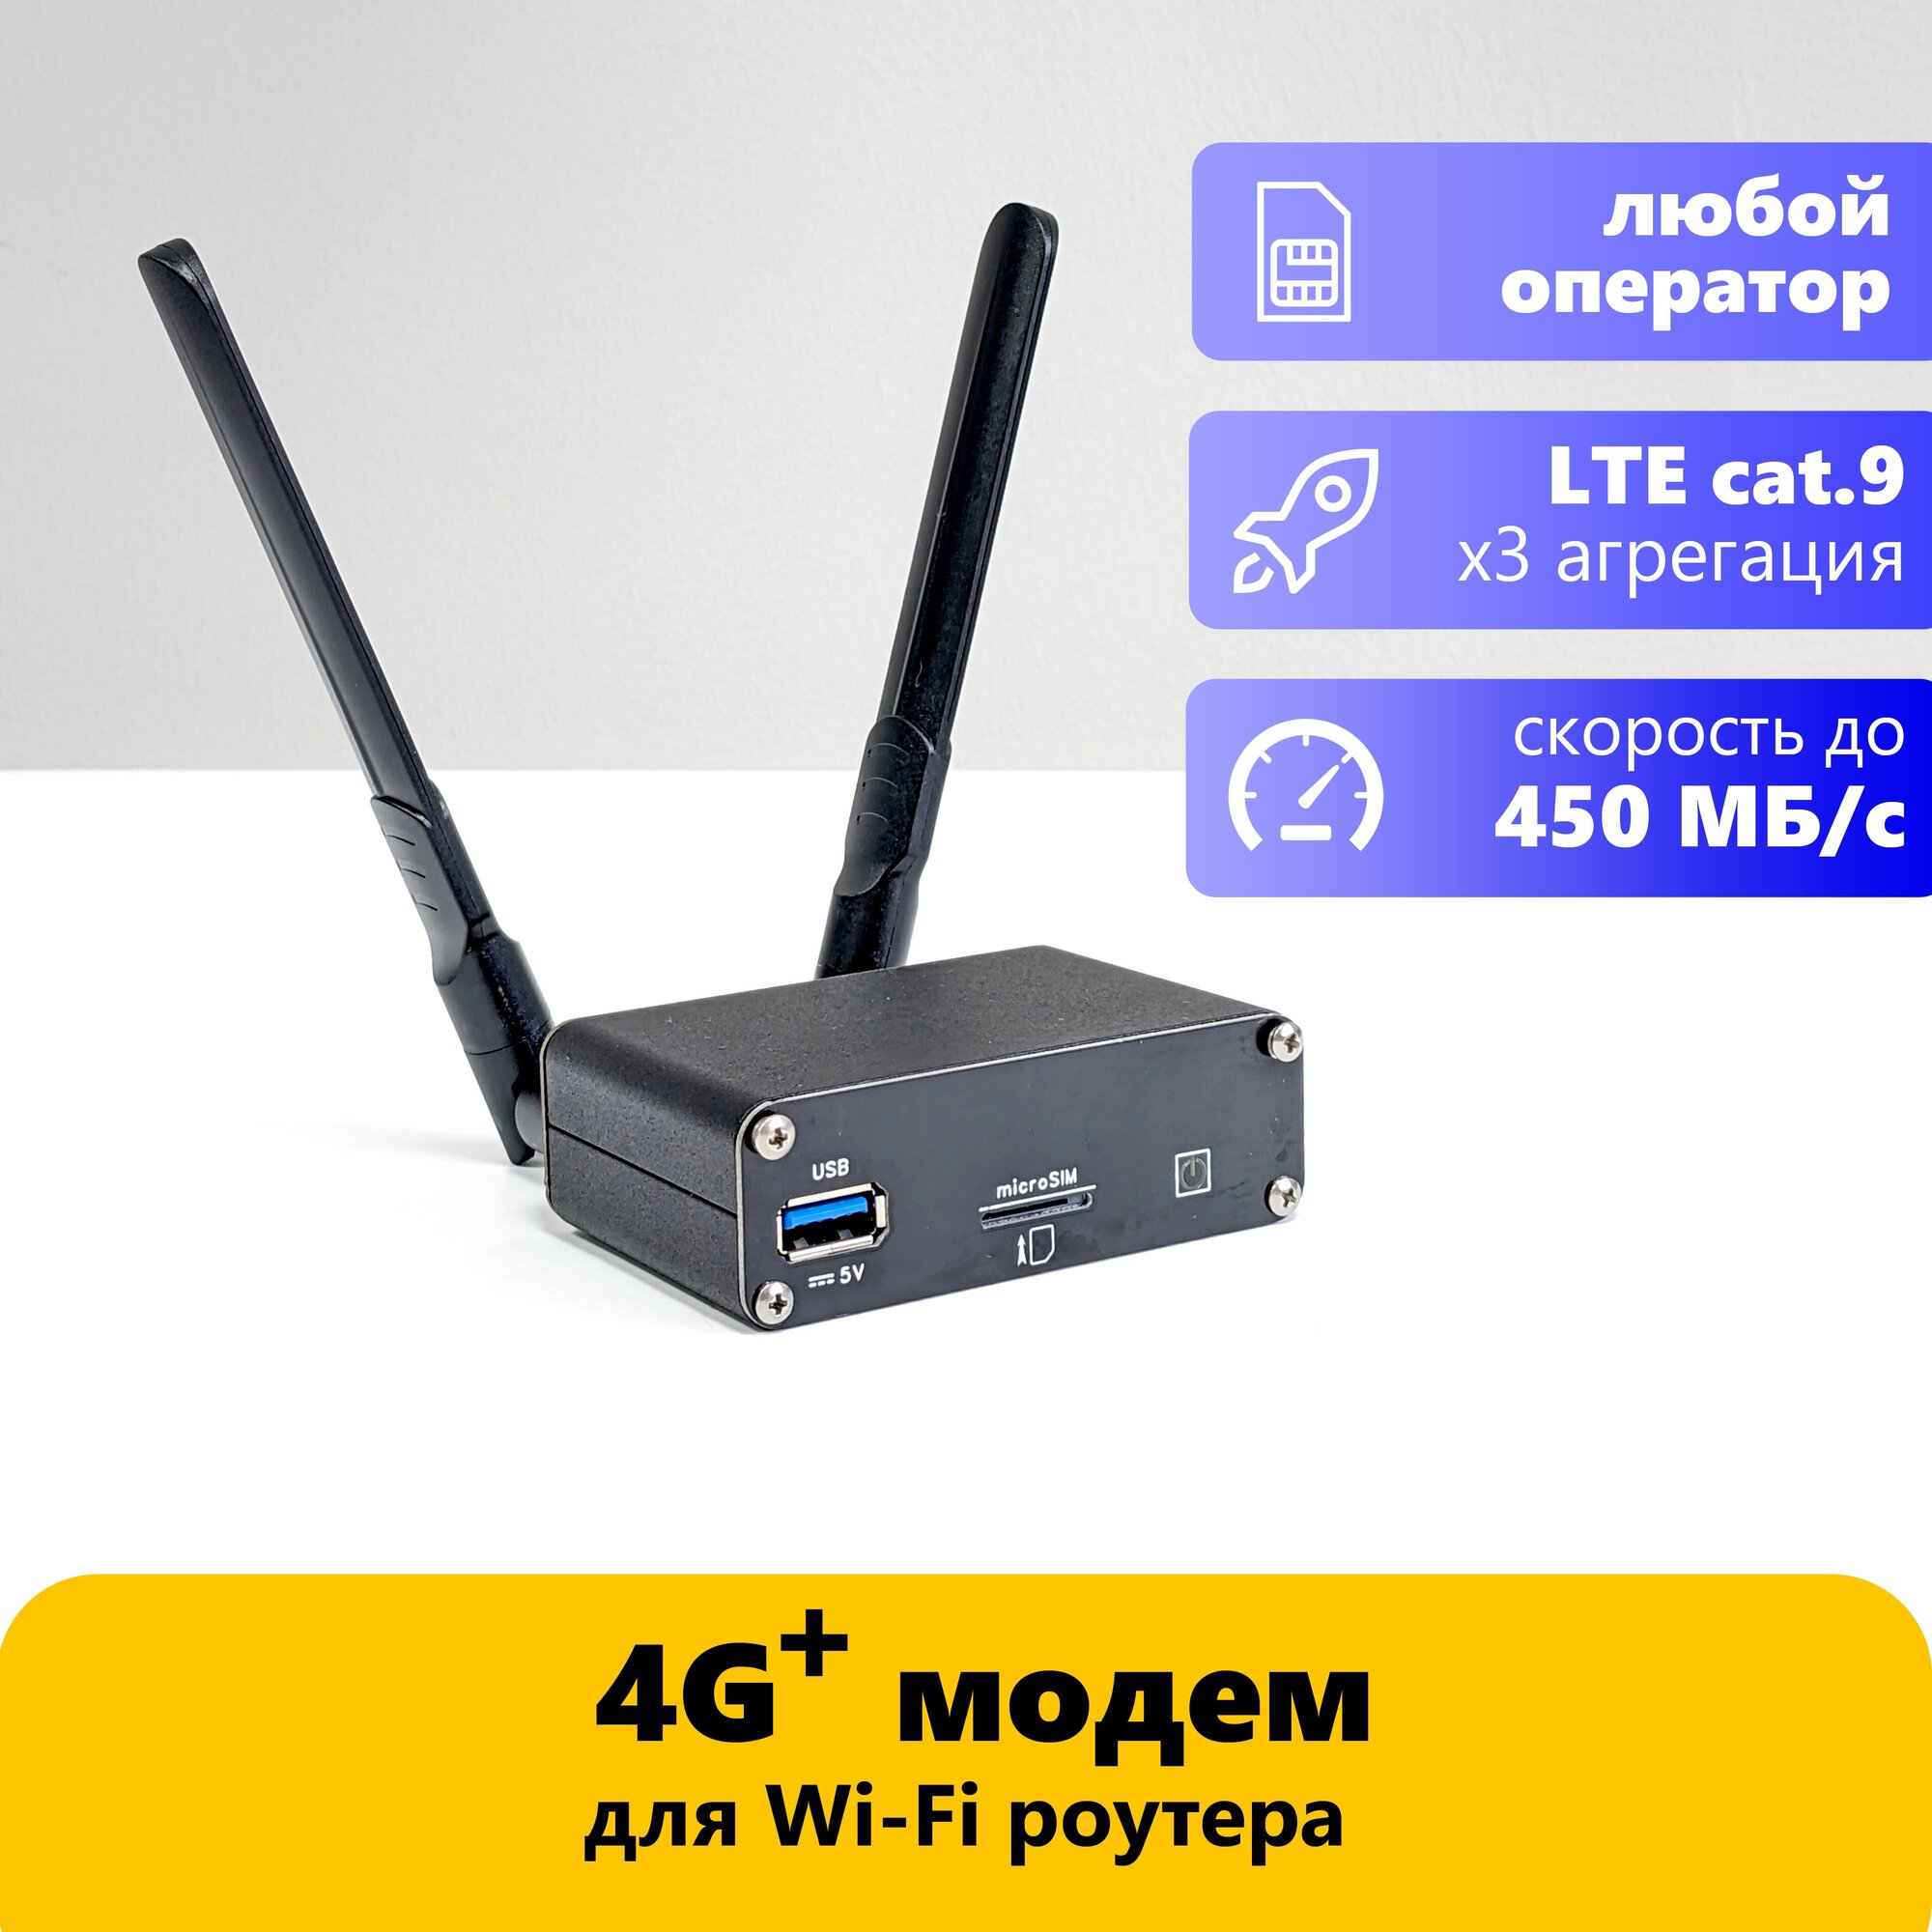 4G модем с агрегацией частот LTE cat.9 на базе модуля Fibocom L850 (до 450 Мбит/с) (F-разъемы)